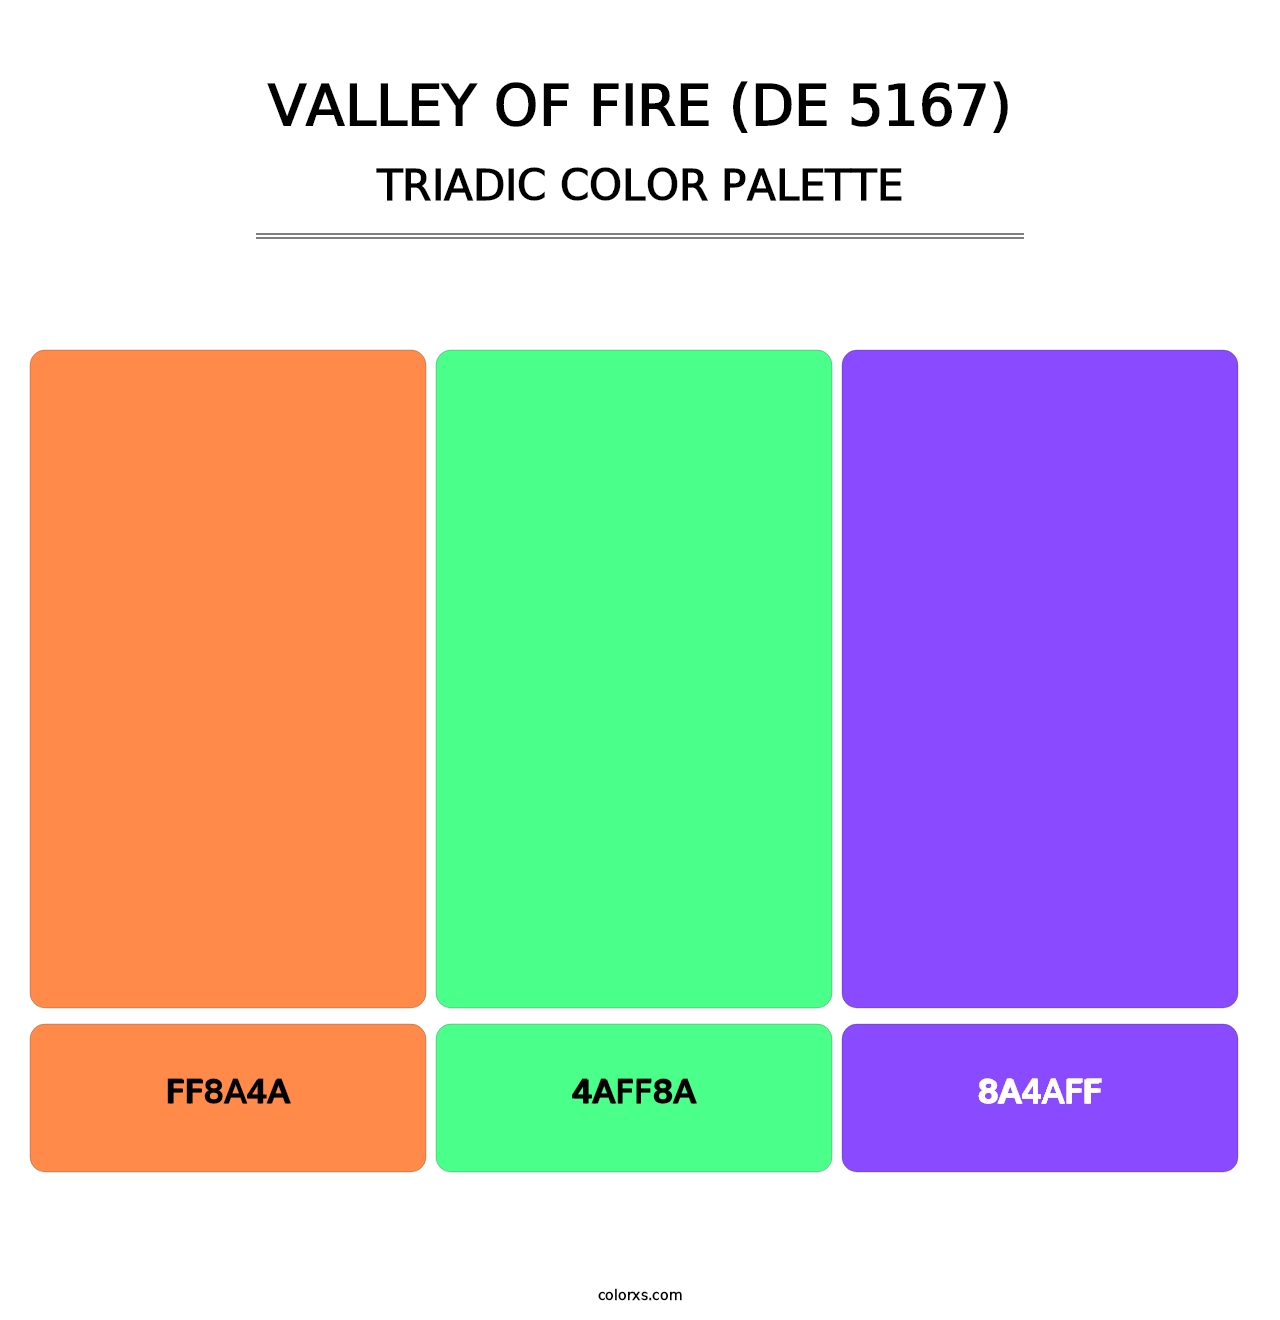 Valley of Fire (DE 5167) - Triadic Color Palette